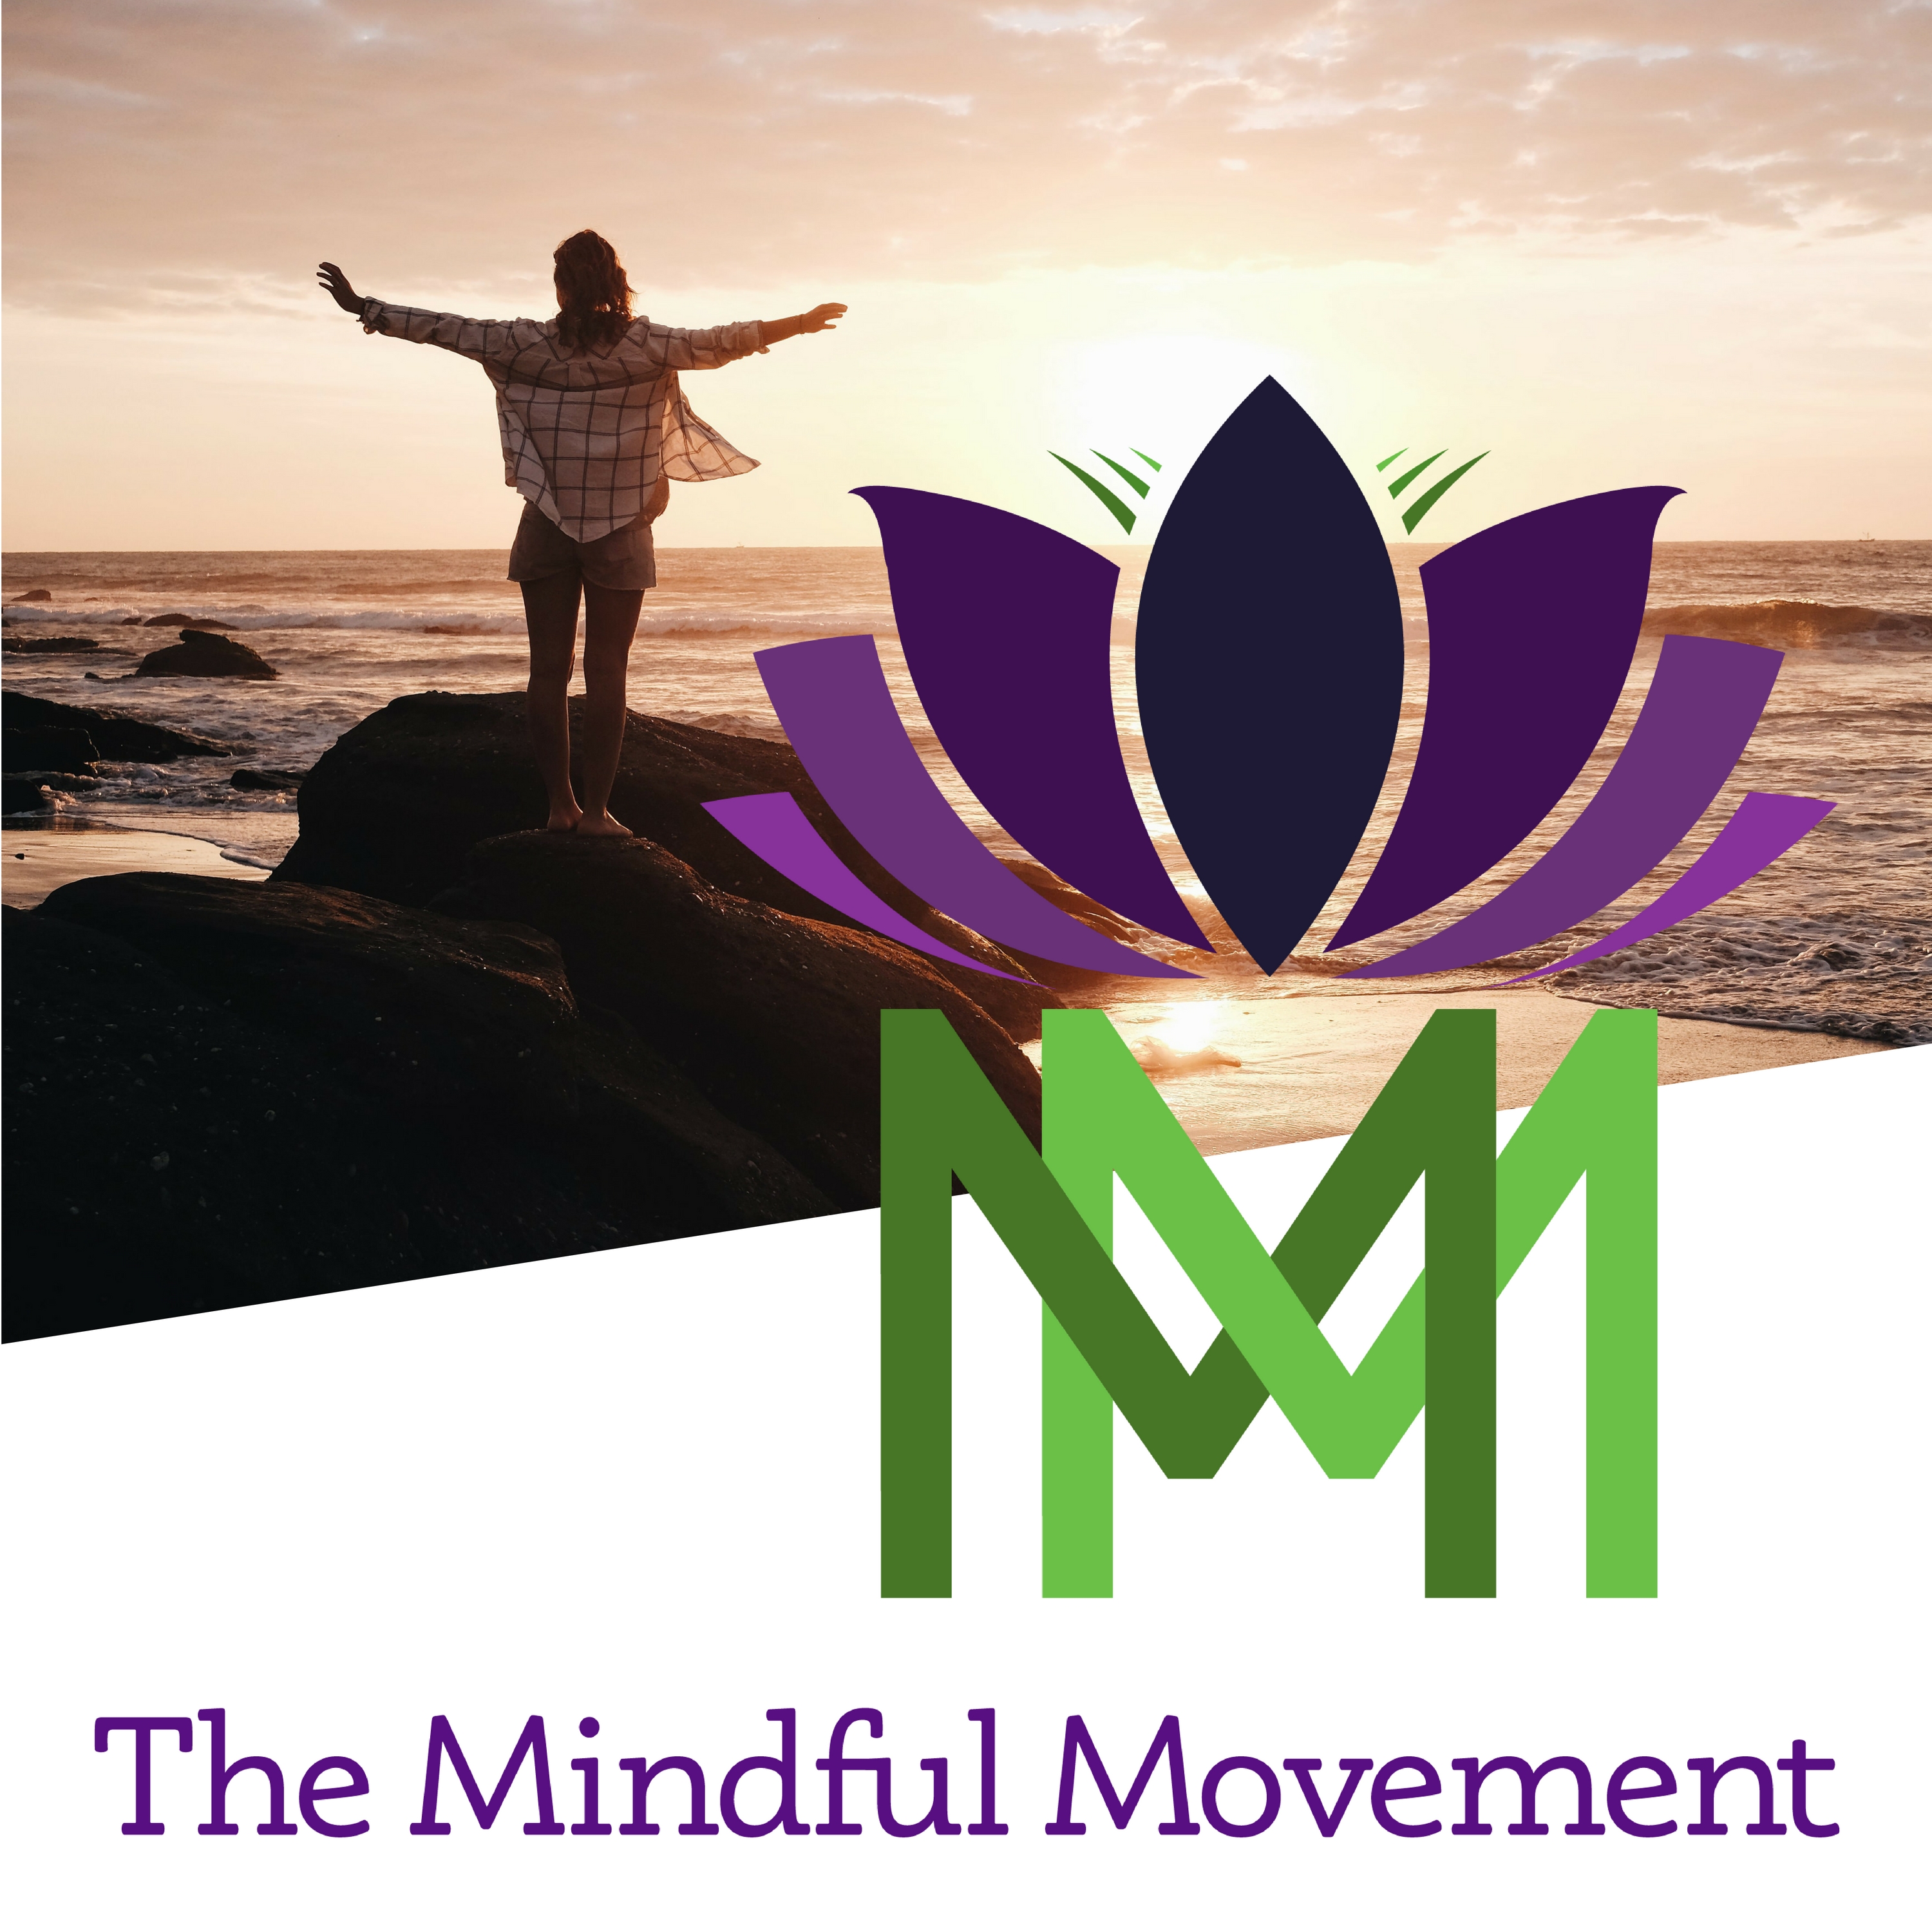 15 Minute Meditation for Building a Positive Internal Dialogue